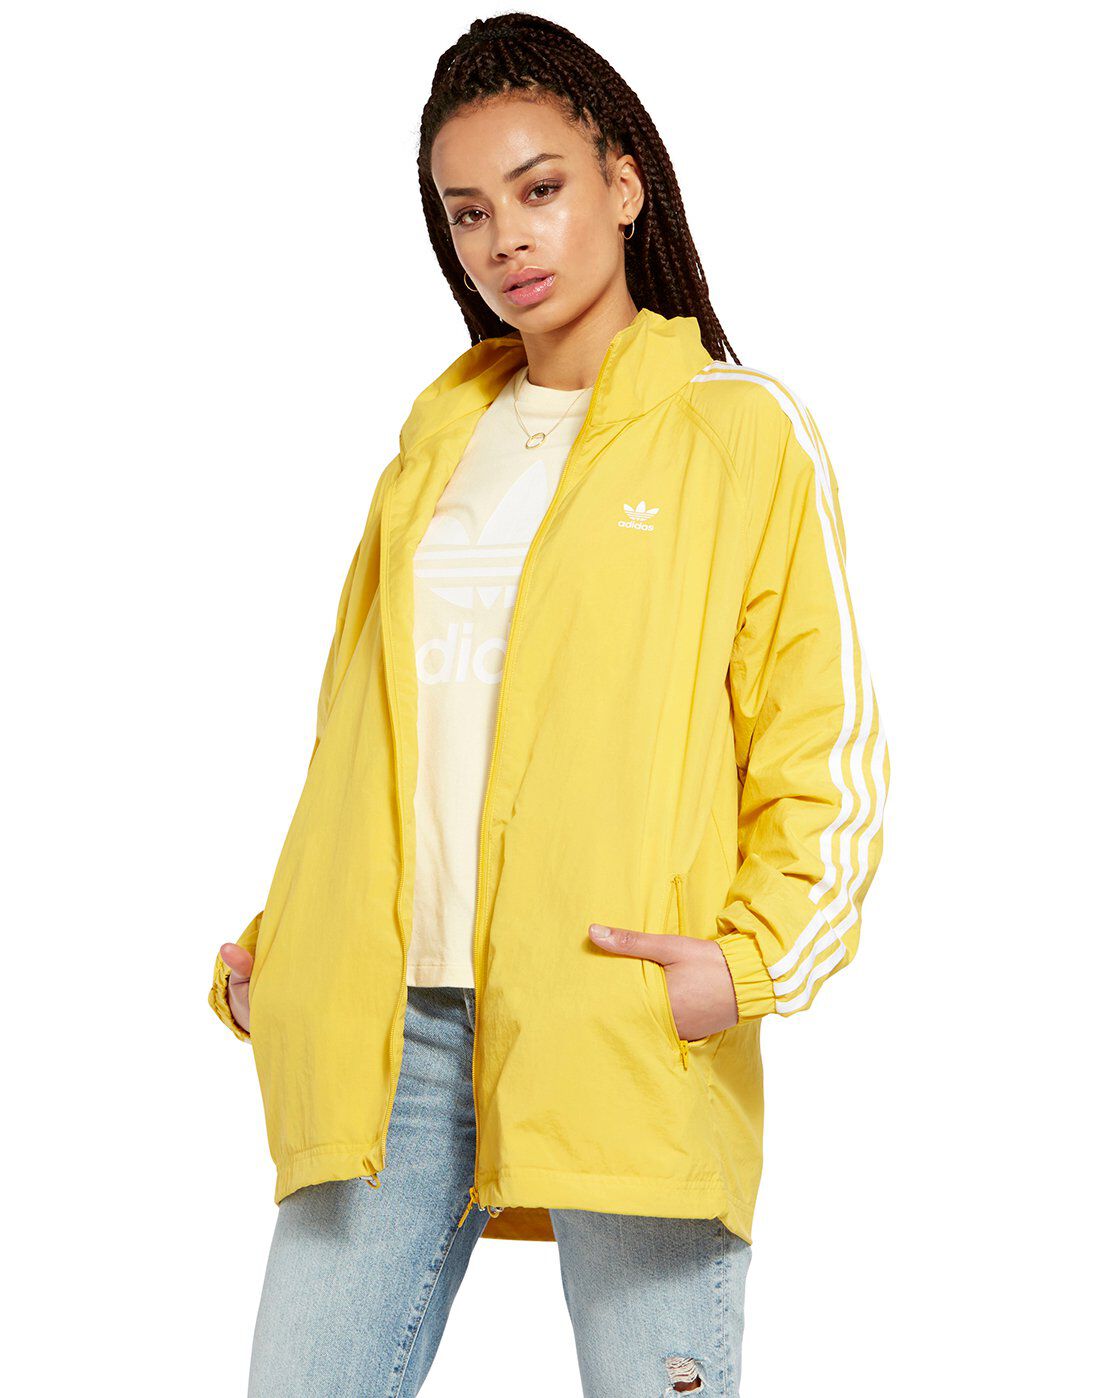 adidas yellow jacket women's